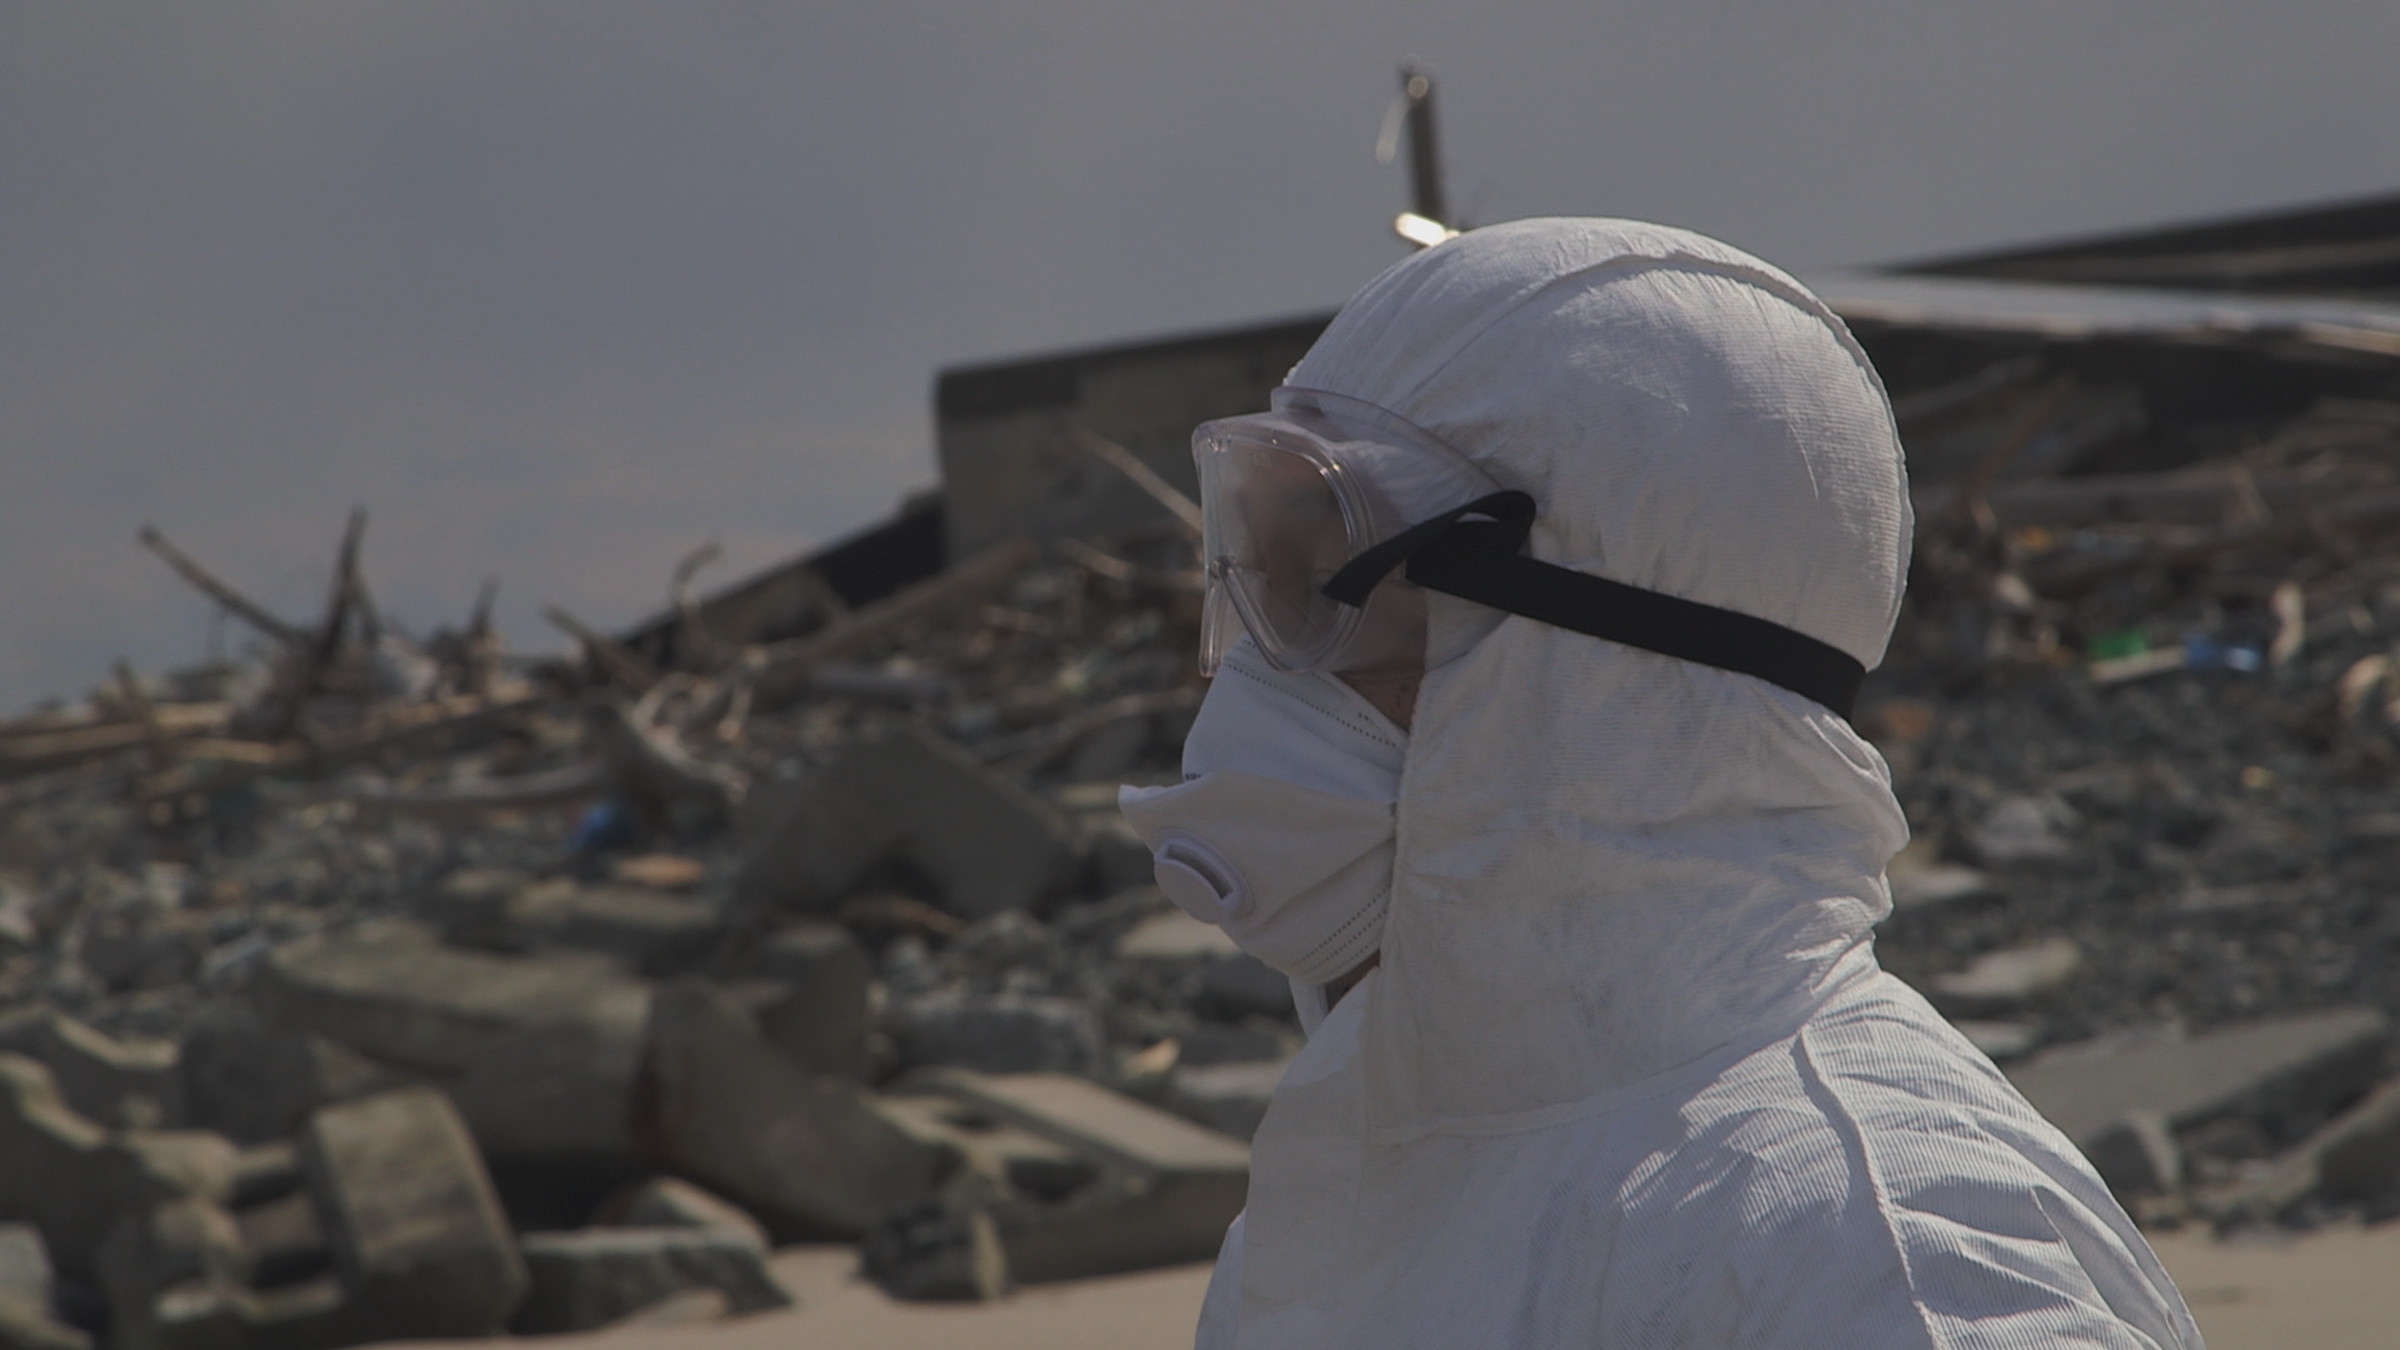 Sakamoto surveys the damage at Fukushima.